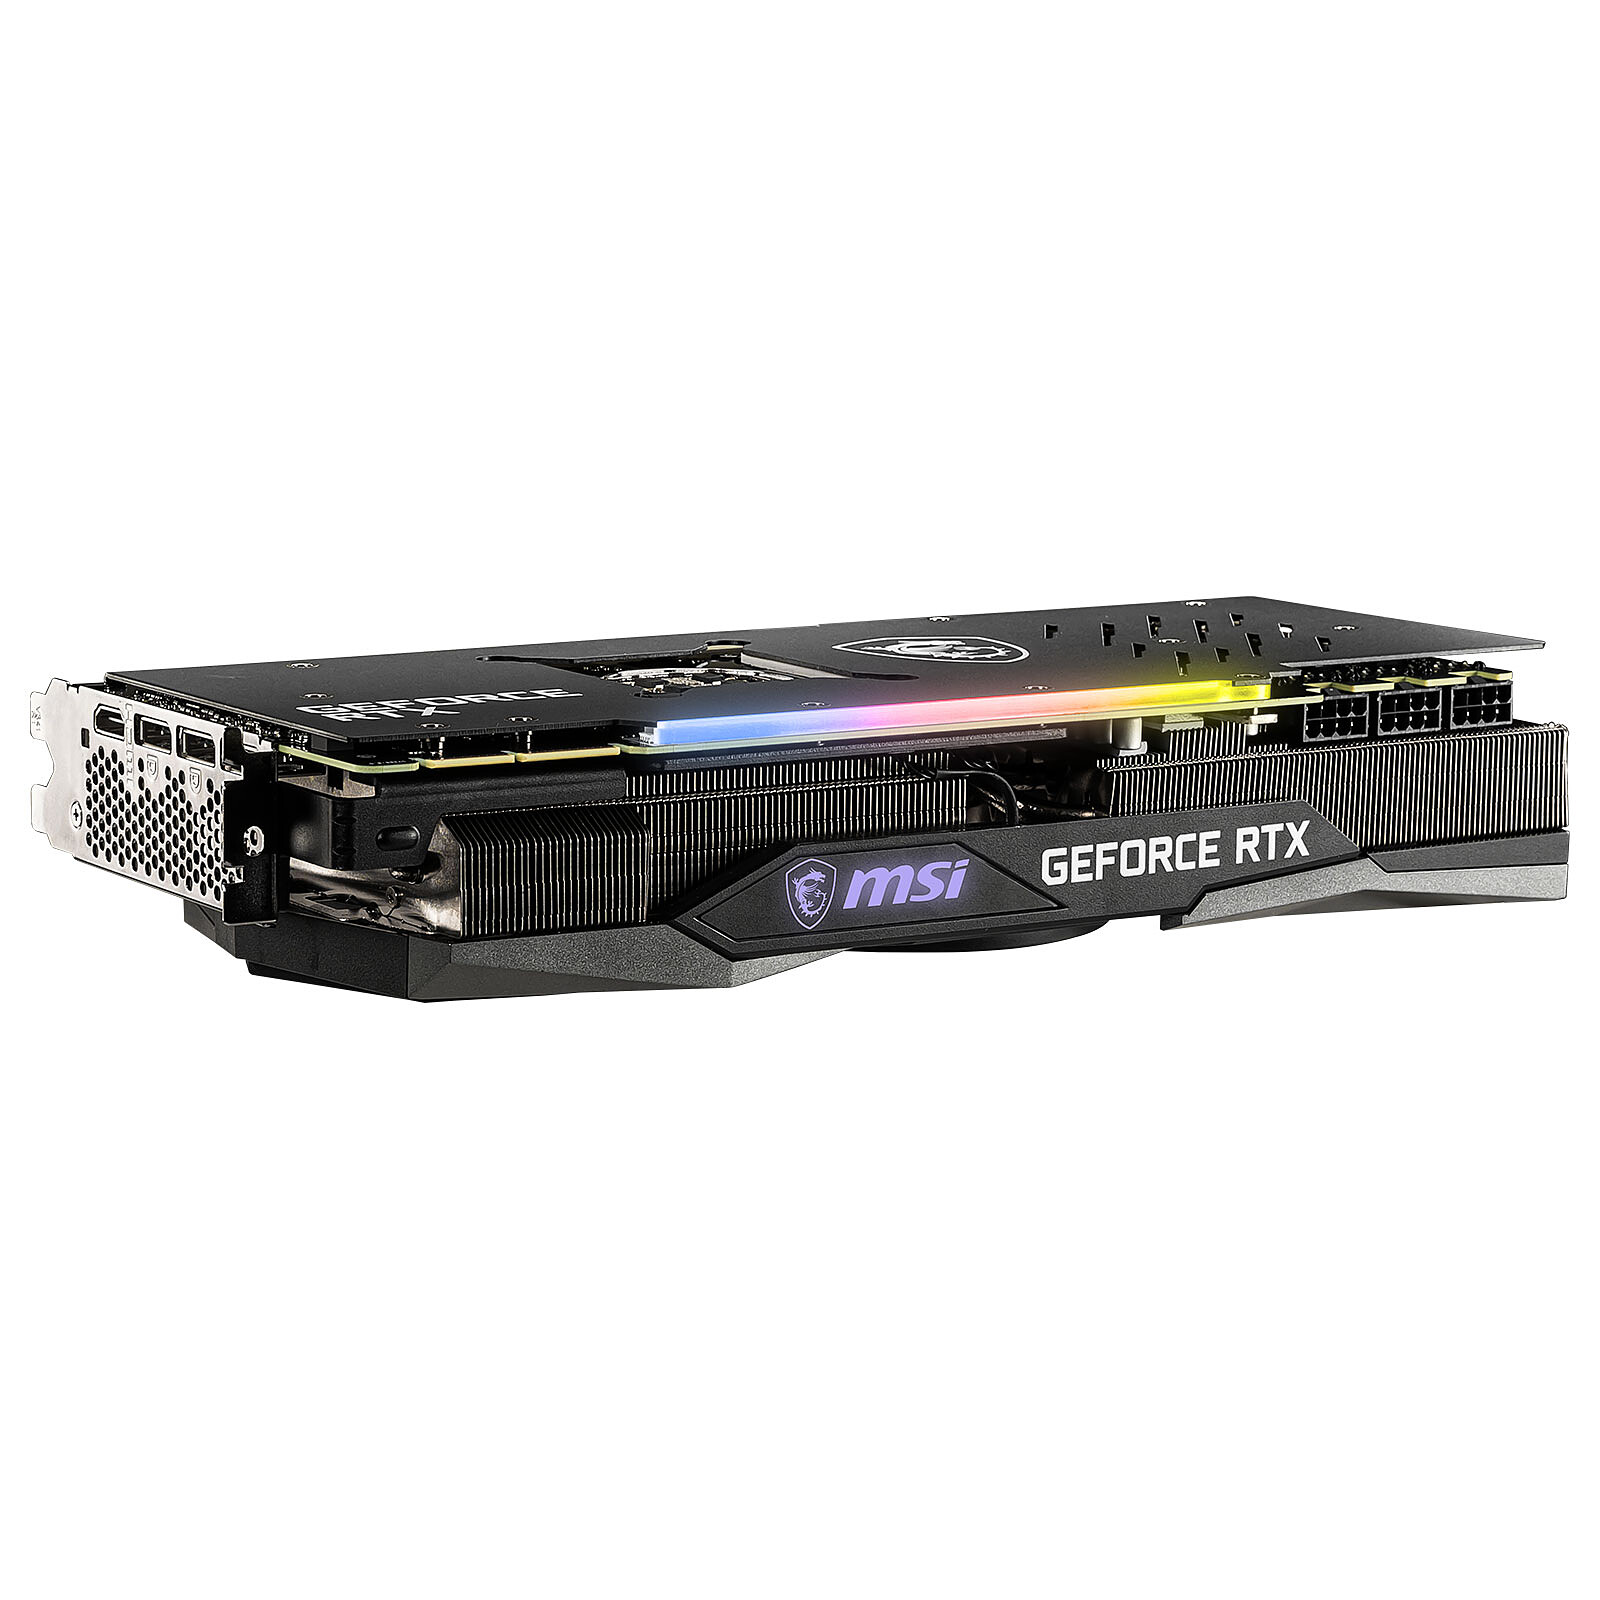 MSI GeForce RTX 3090 GAMING X TRIO 24G - Graphics card - LDLC 3